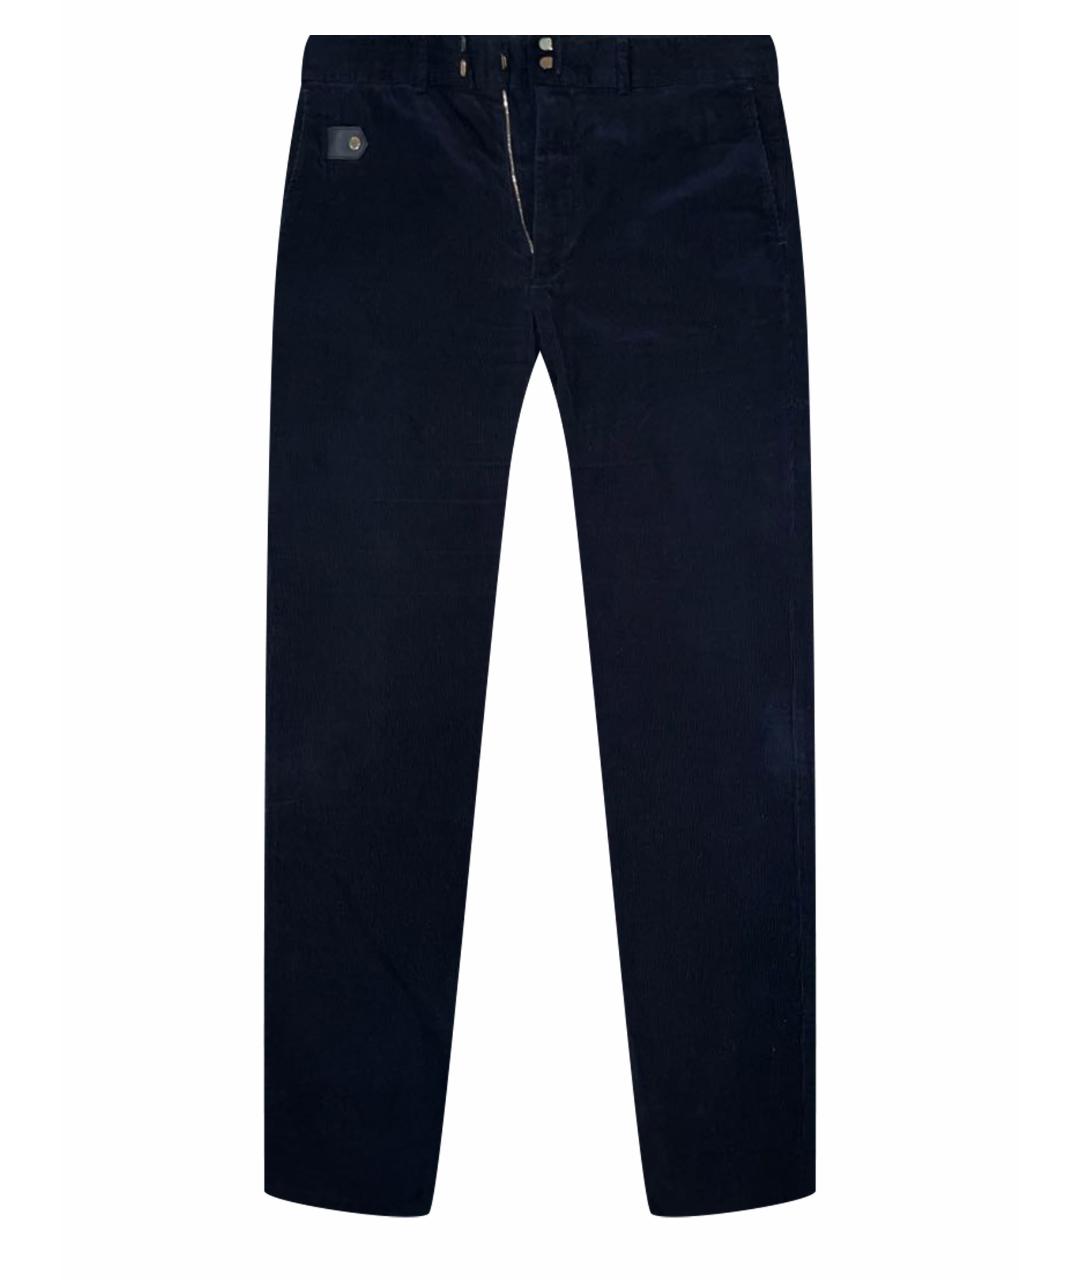 LOUIS VUITTON PRE-OWNED Черные велюровые классические брюки, фото 1